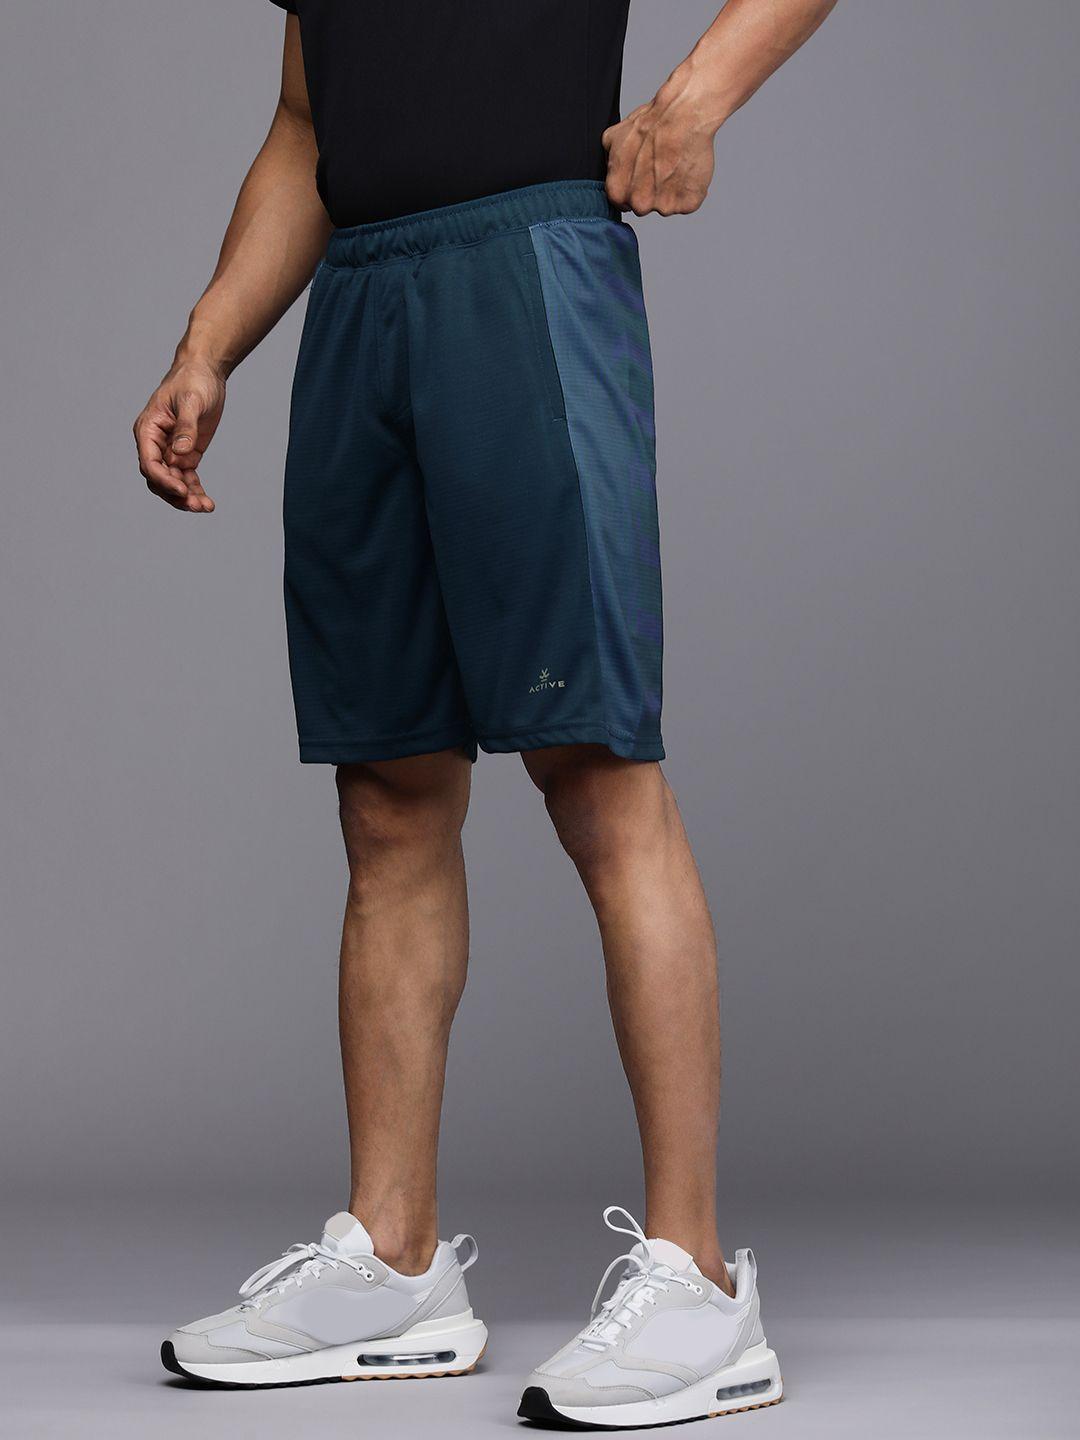 wrogn-active-men-teal-blue-colourblocked-sports-shorts